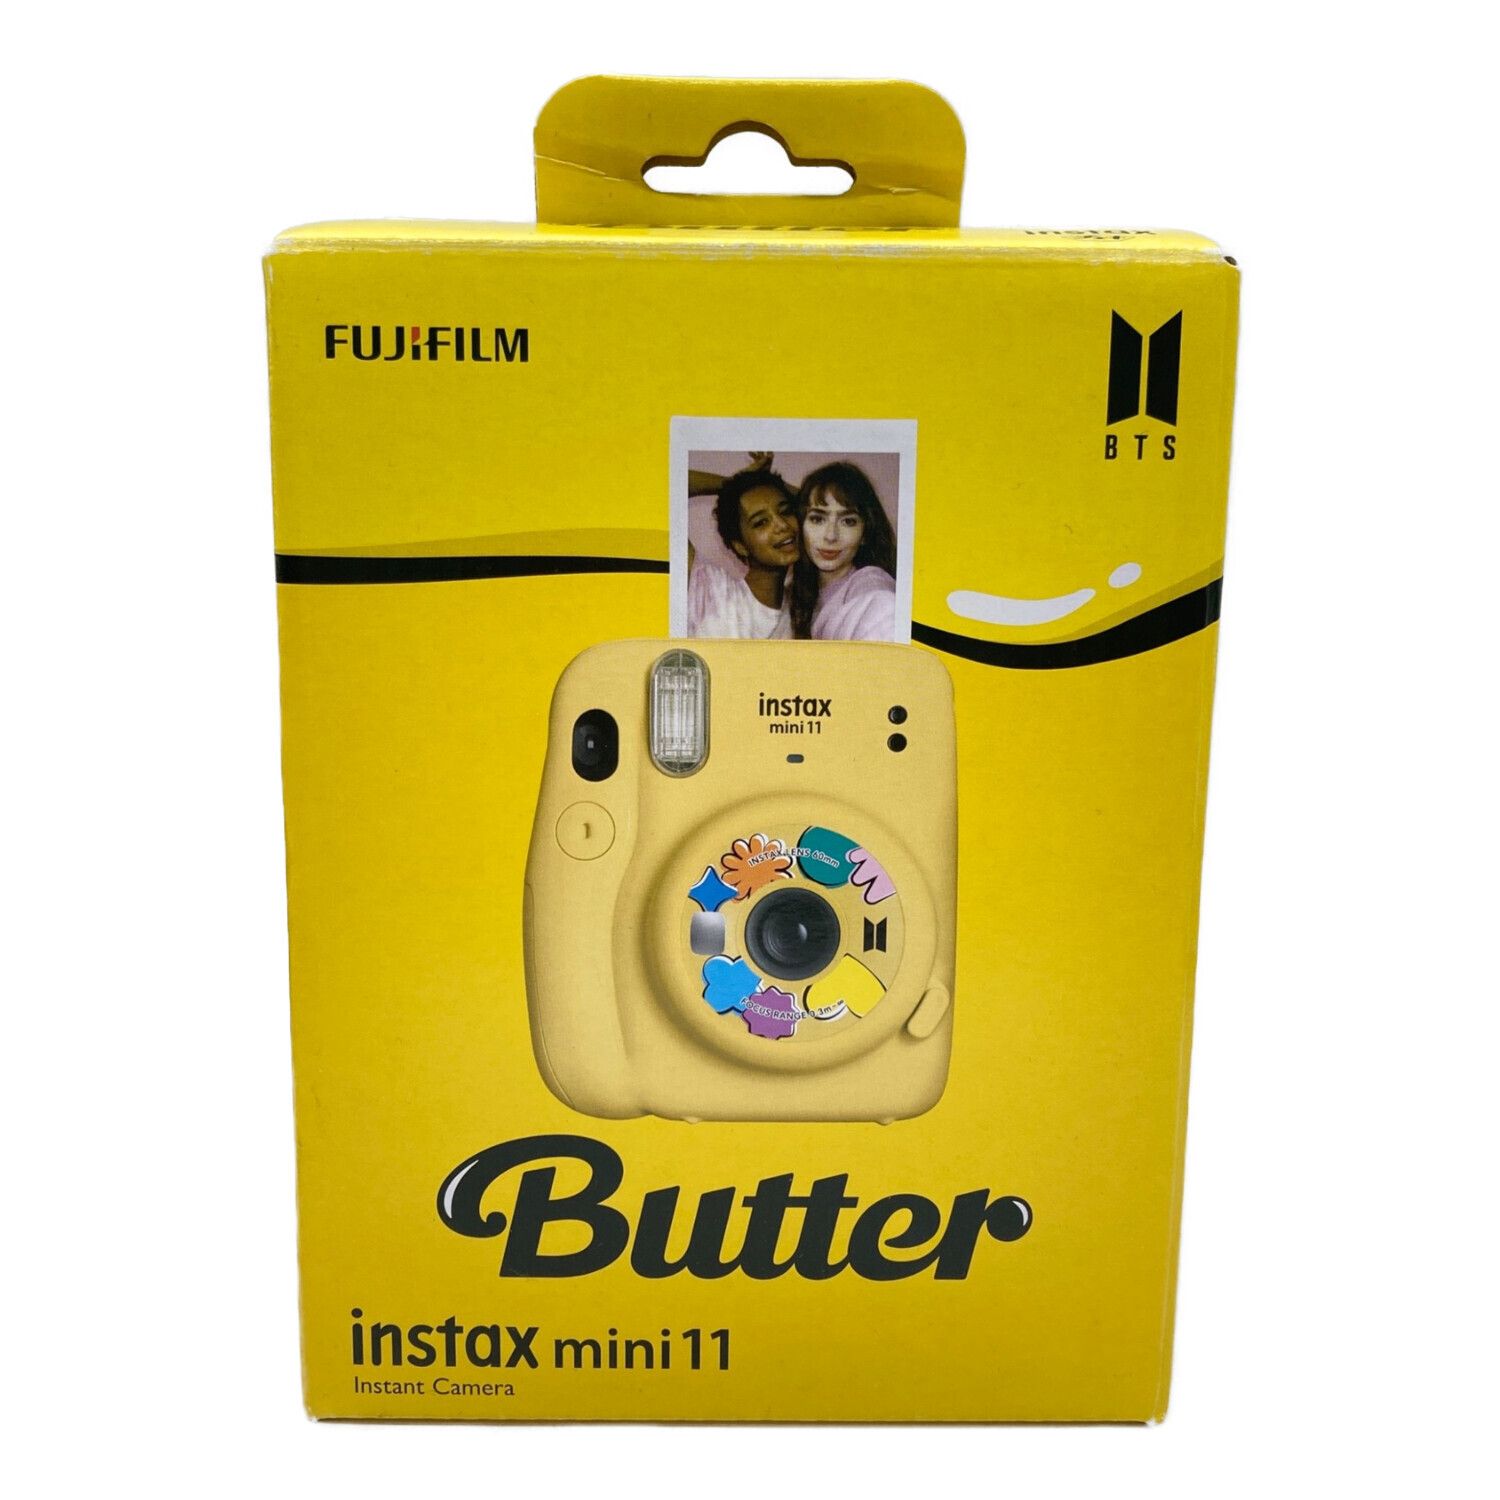 BTS Butter チェキ フィルム instax mini11-